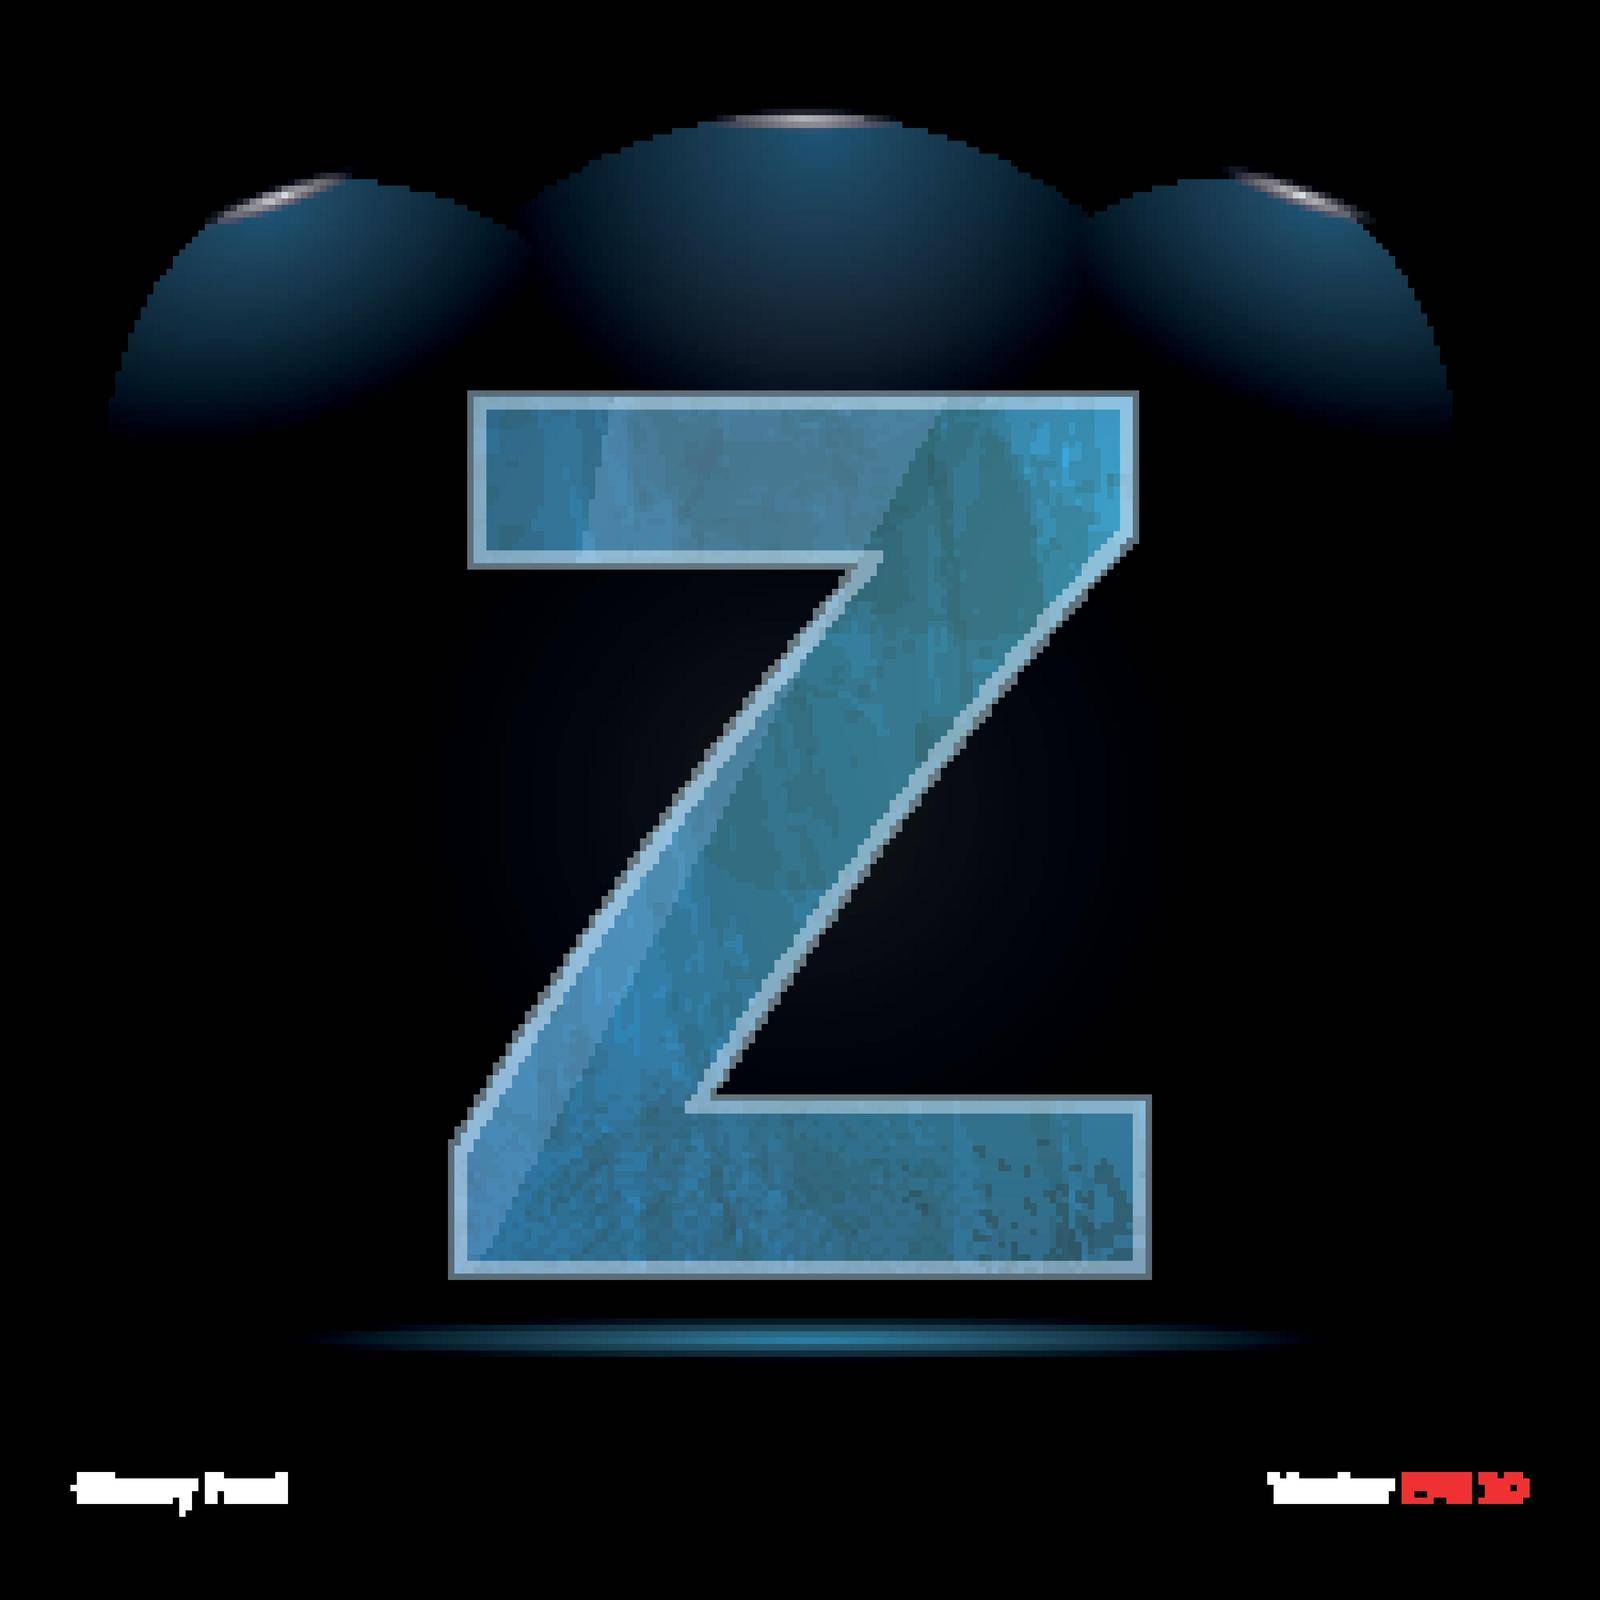 Glossy Grunge Font. Dark Vector Background. Letter Z